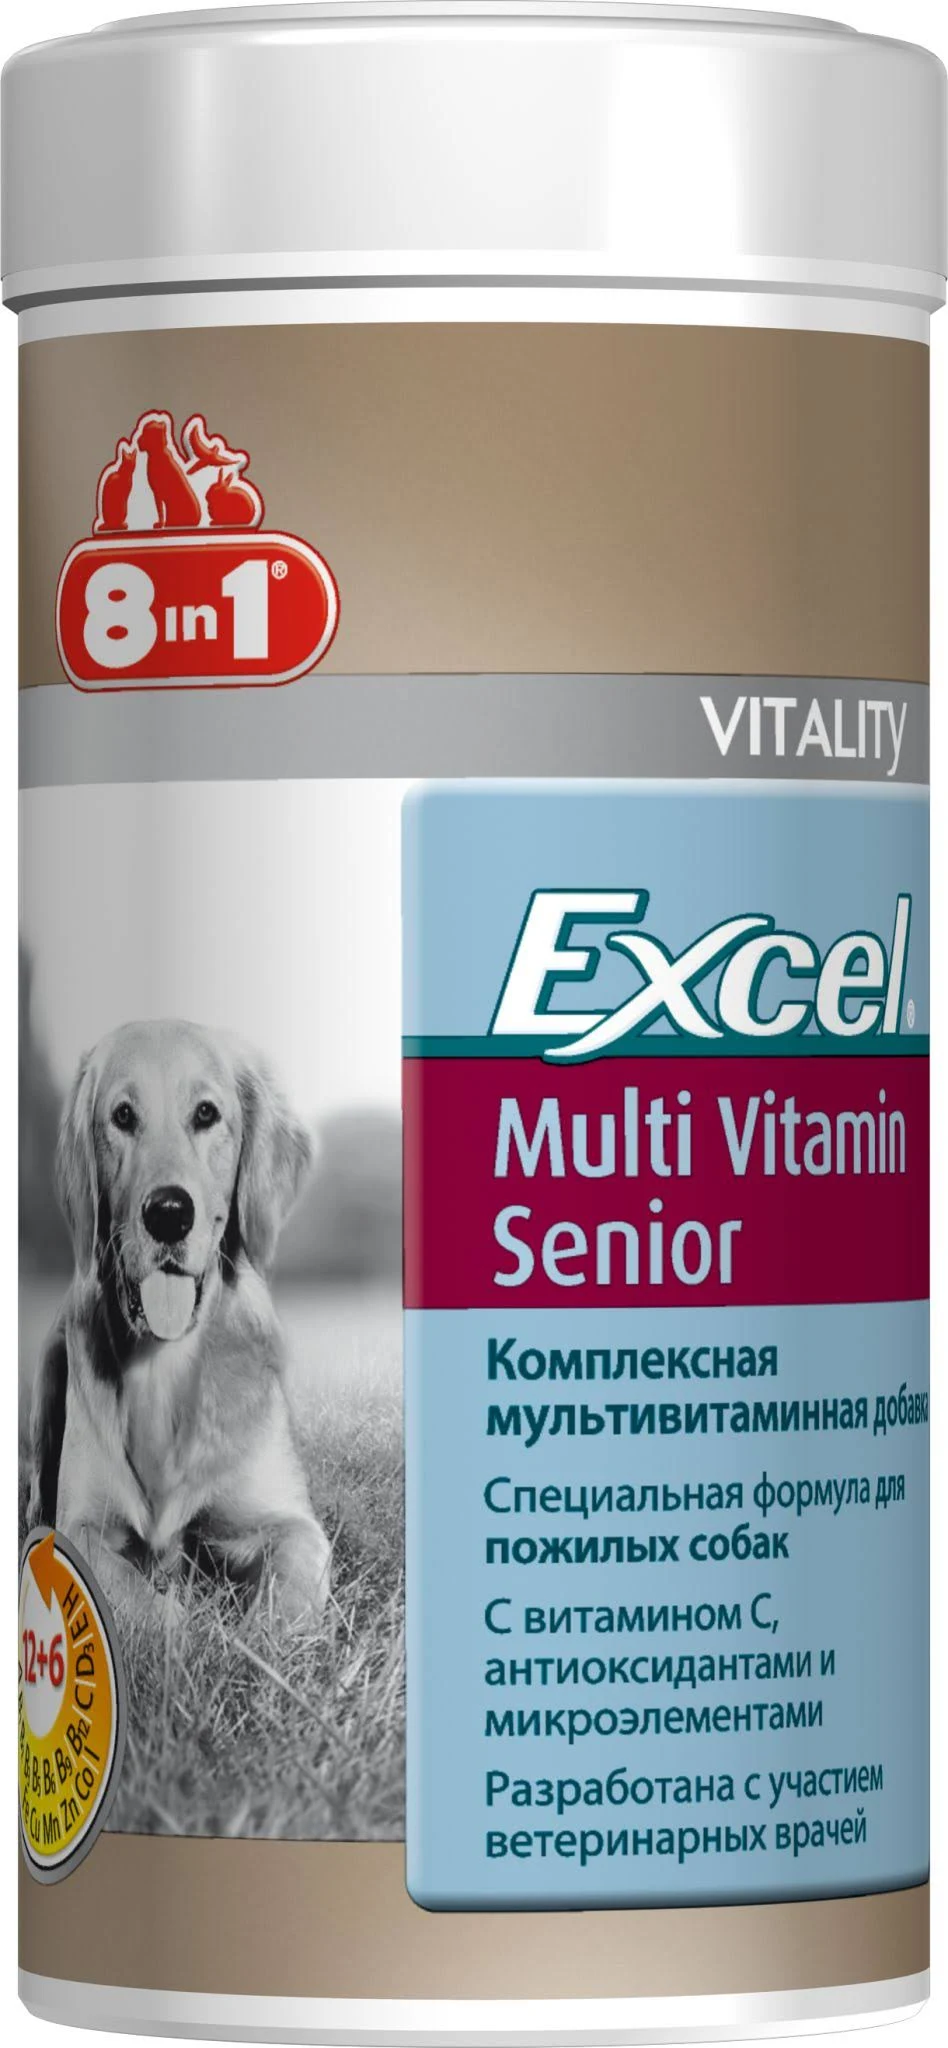 Мультивитамины 8in1 Excel Multi Vitamin Senior для пожилых собак 70 таб